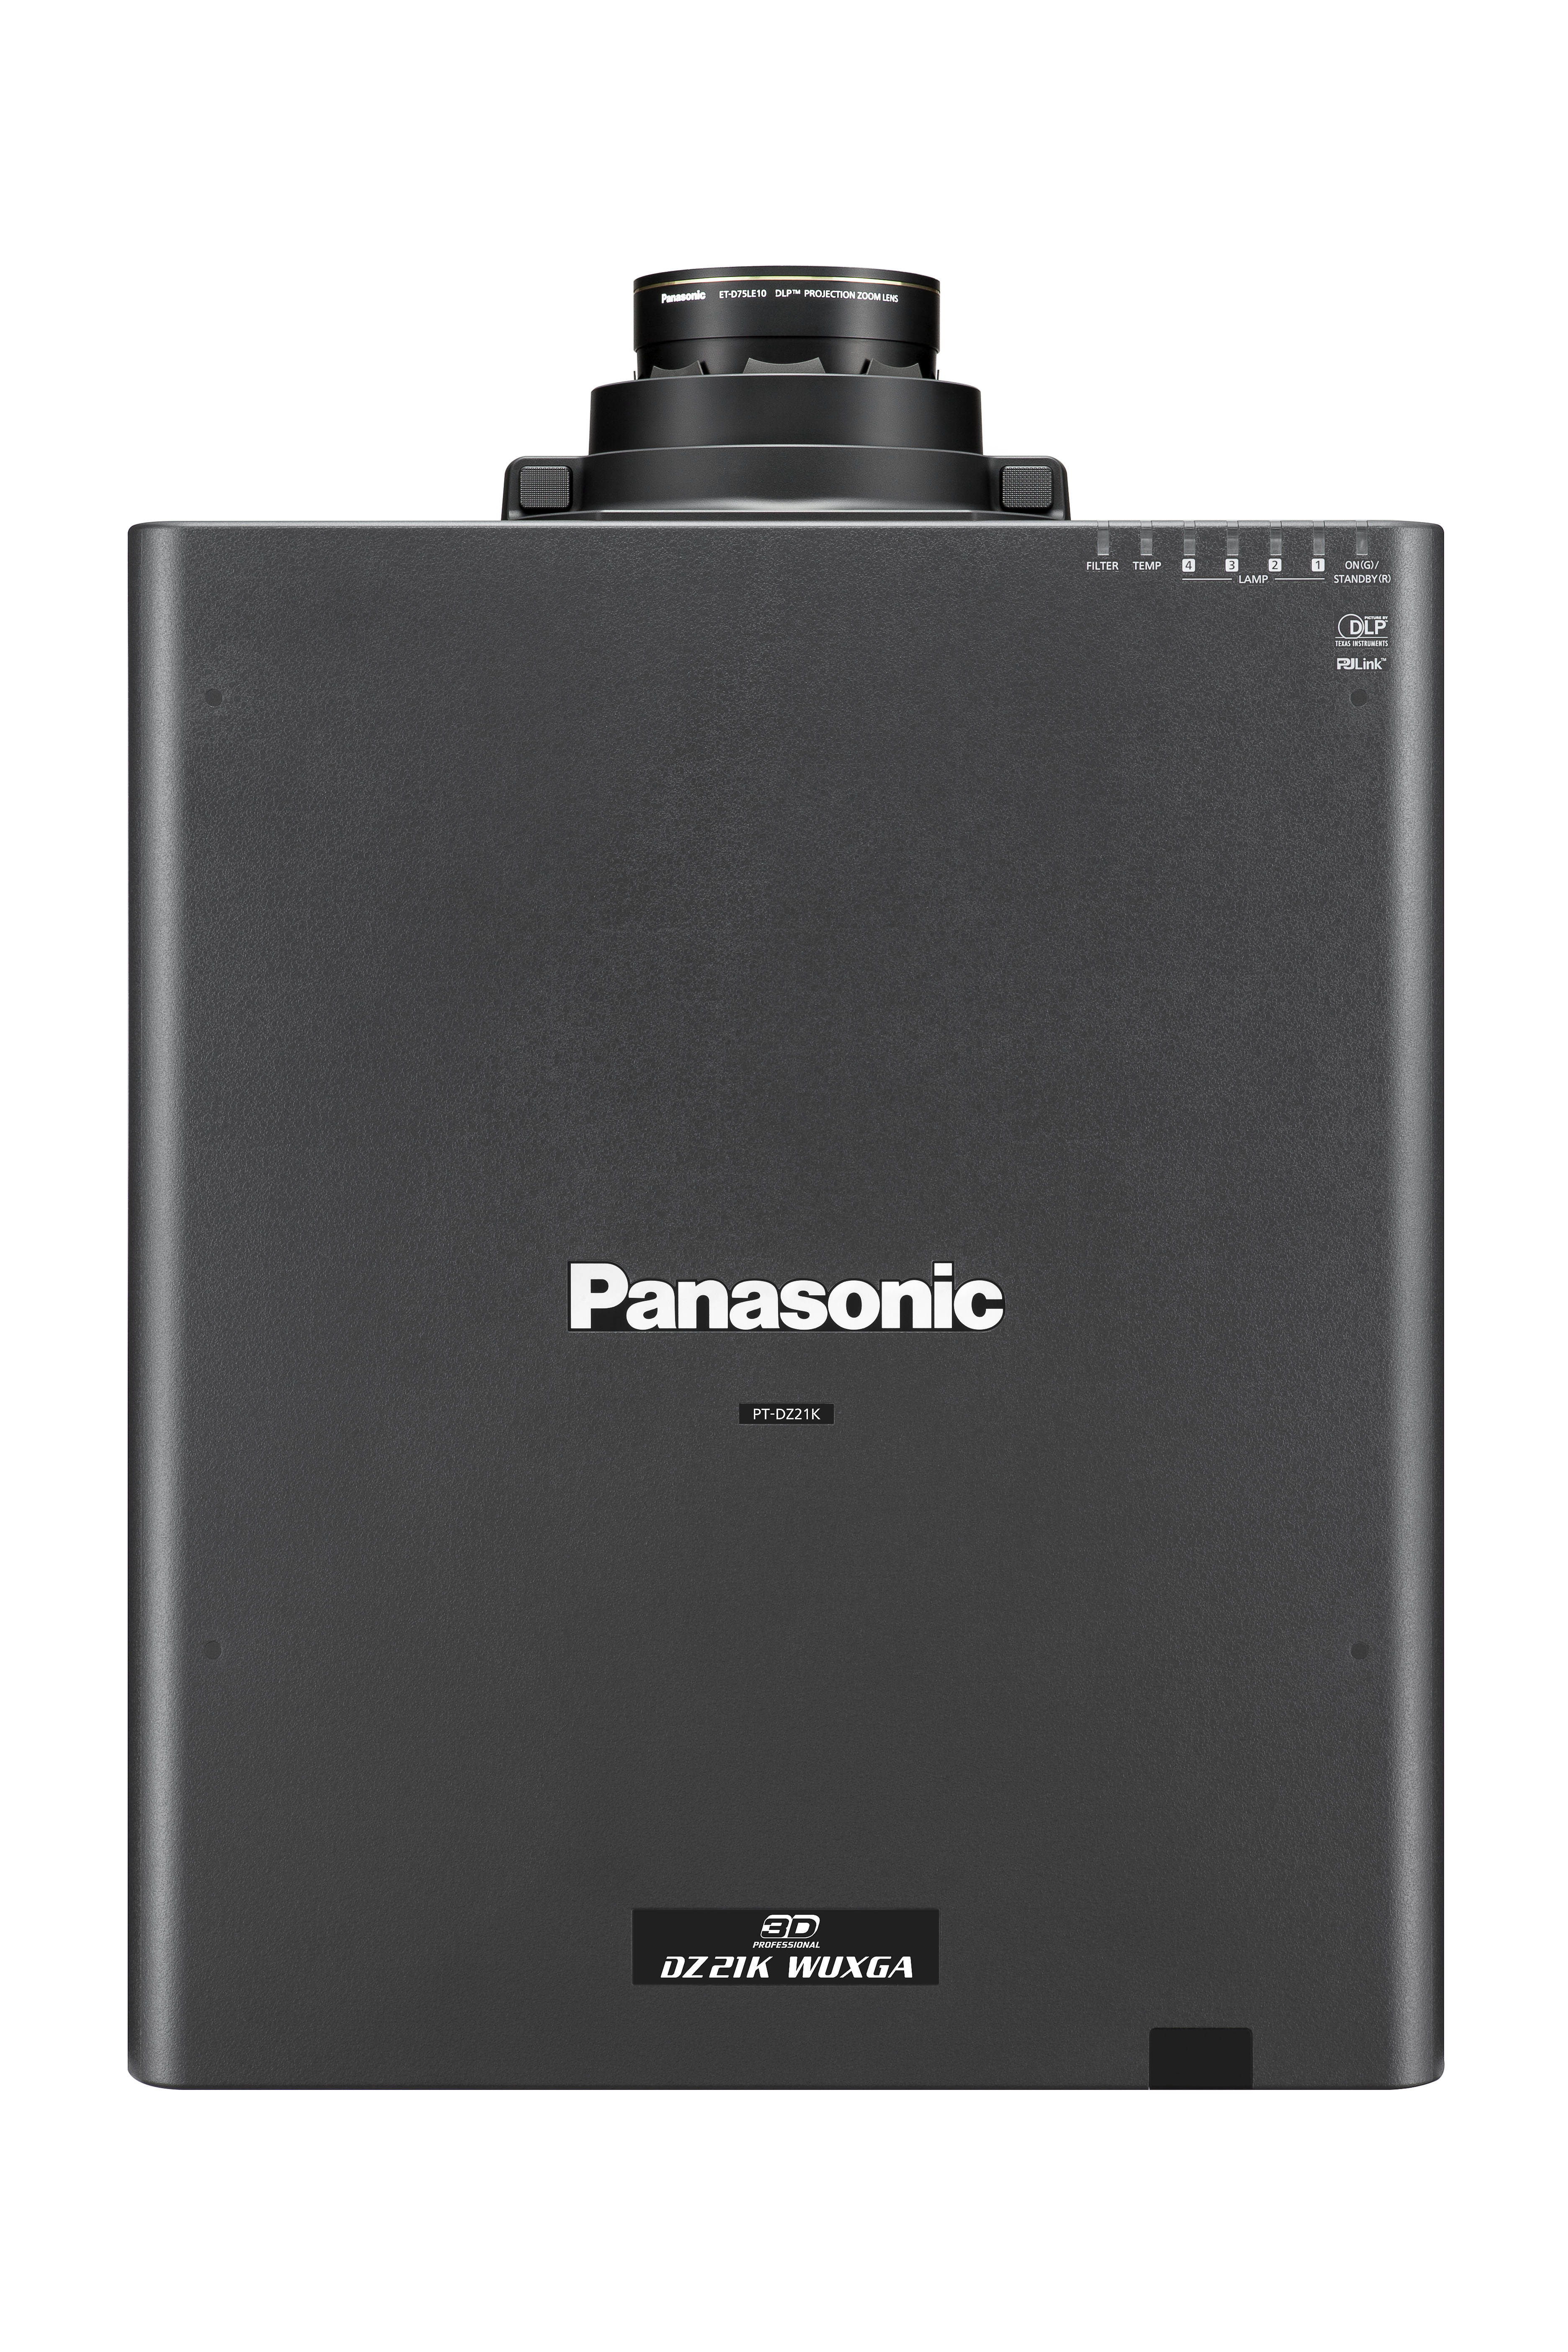 PT-DZ21K Series - Panasonic Projector Product Database 